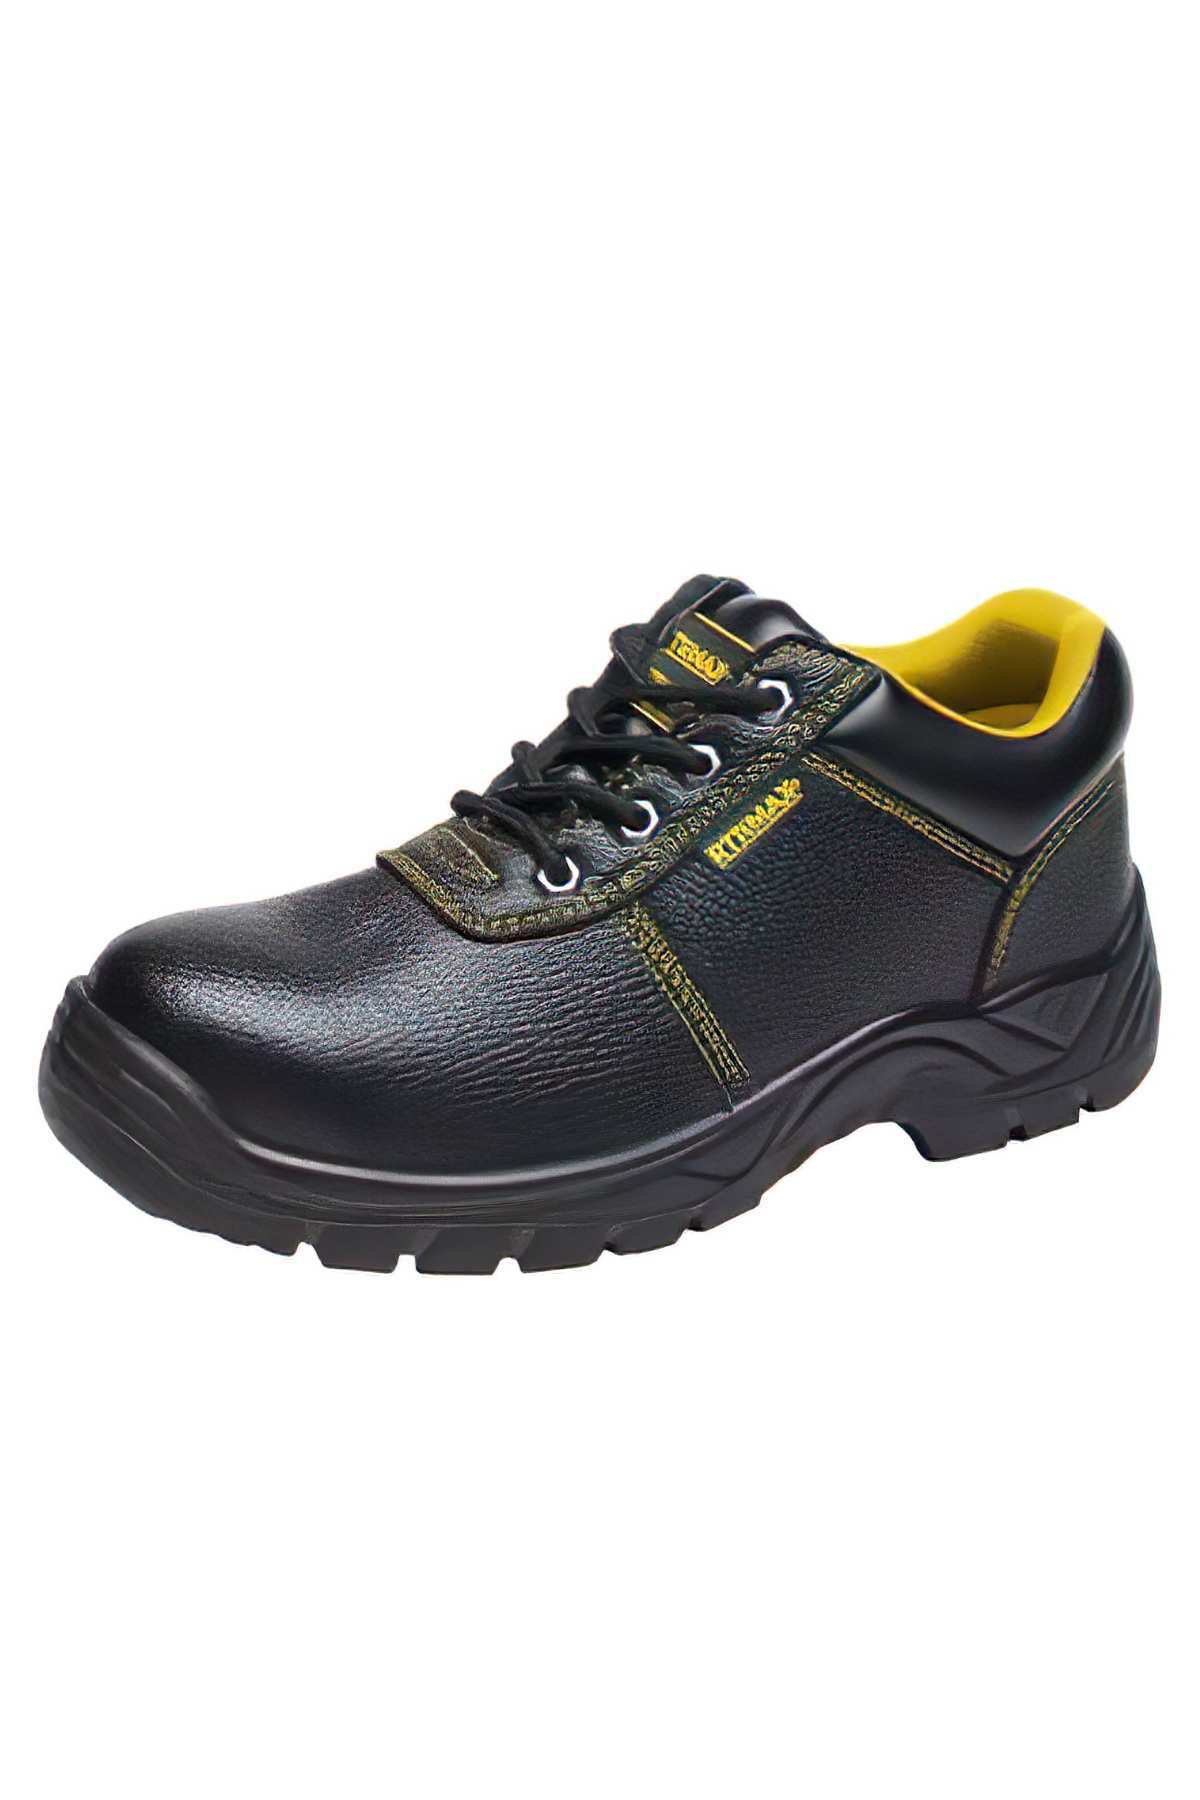 RTRMAX RHS2644 Güvenlik Ayakkabısı